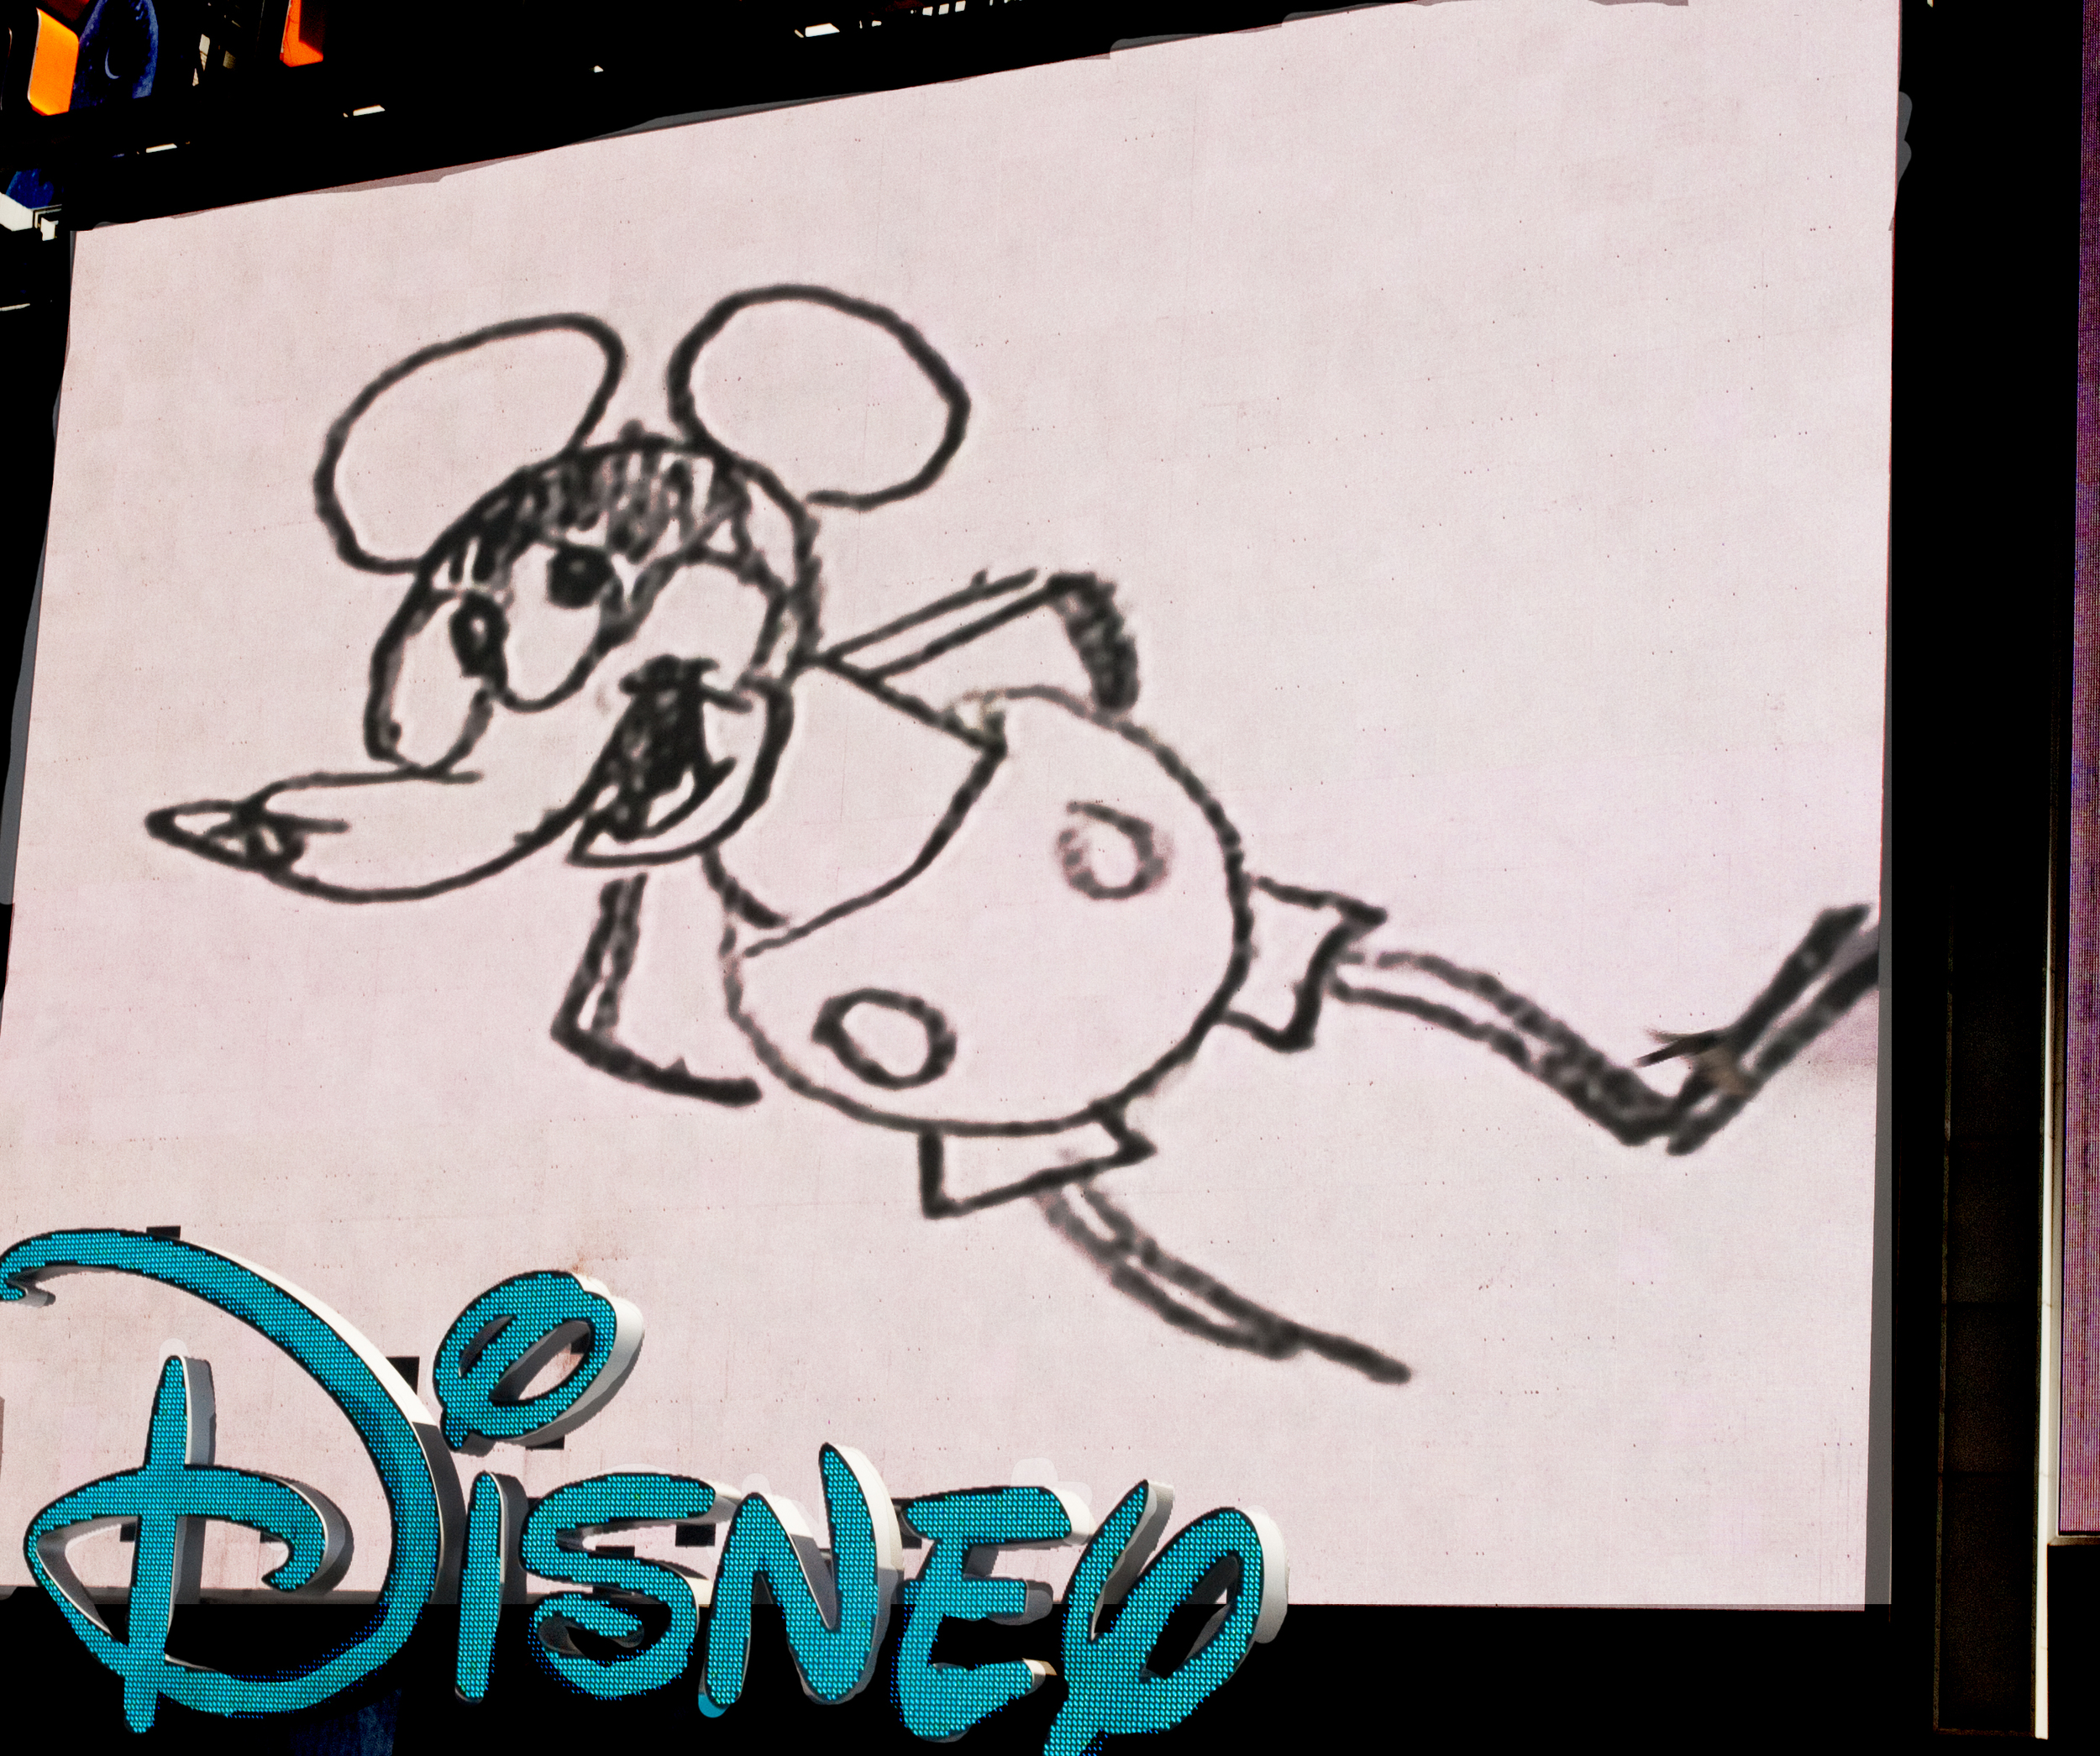 Disney - Mickey